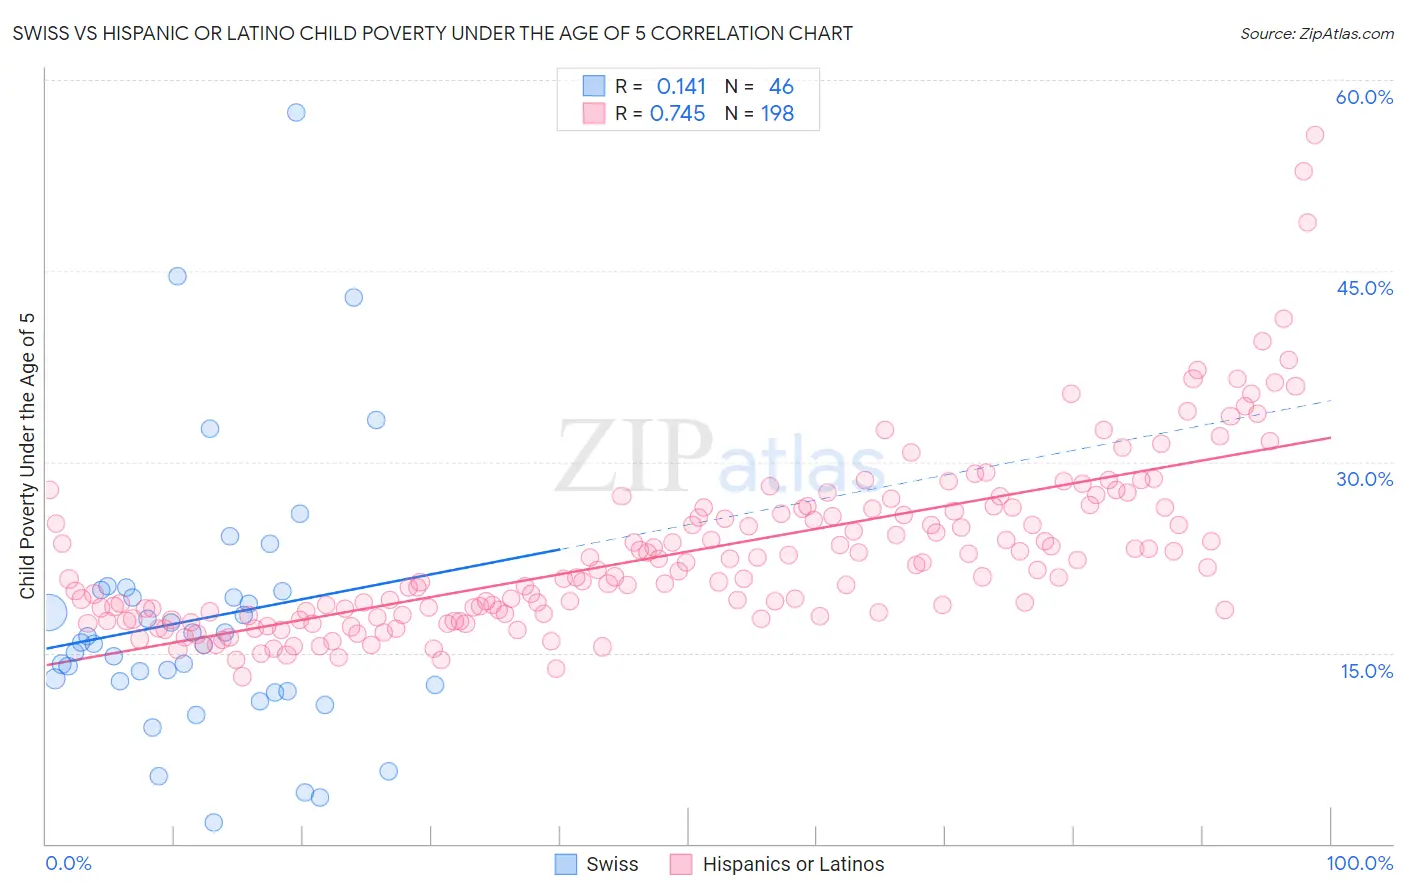 Swiss vs Hispanic or Latino Child Poverty Under the Age of 5